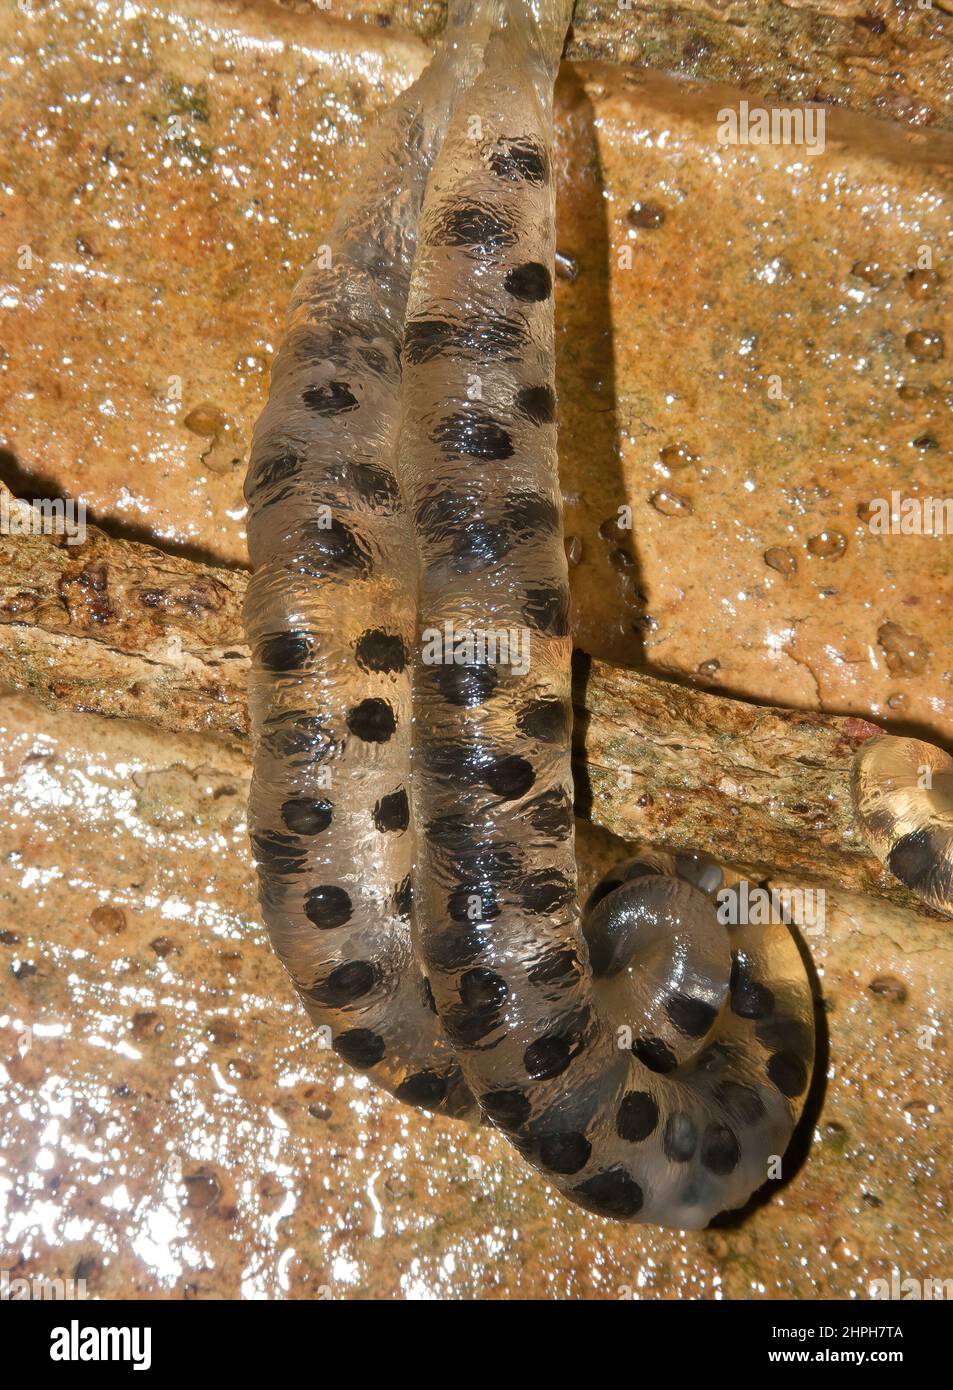 Closeup on egg-sacs of the Korean Cheju salamander, Hynobius leechi quelpartensis Stock Photo